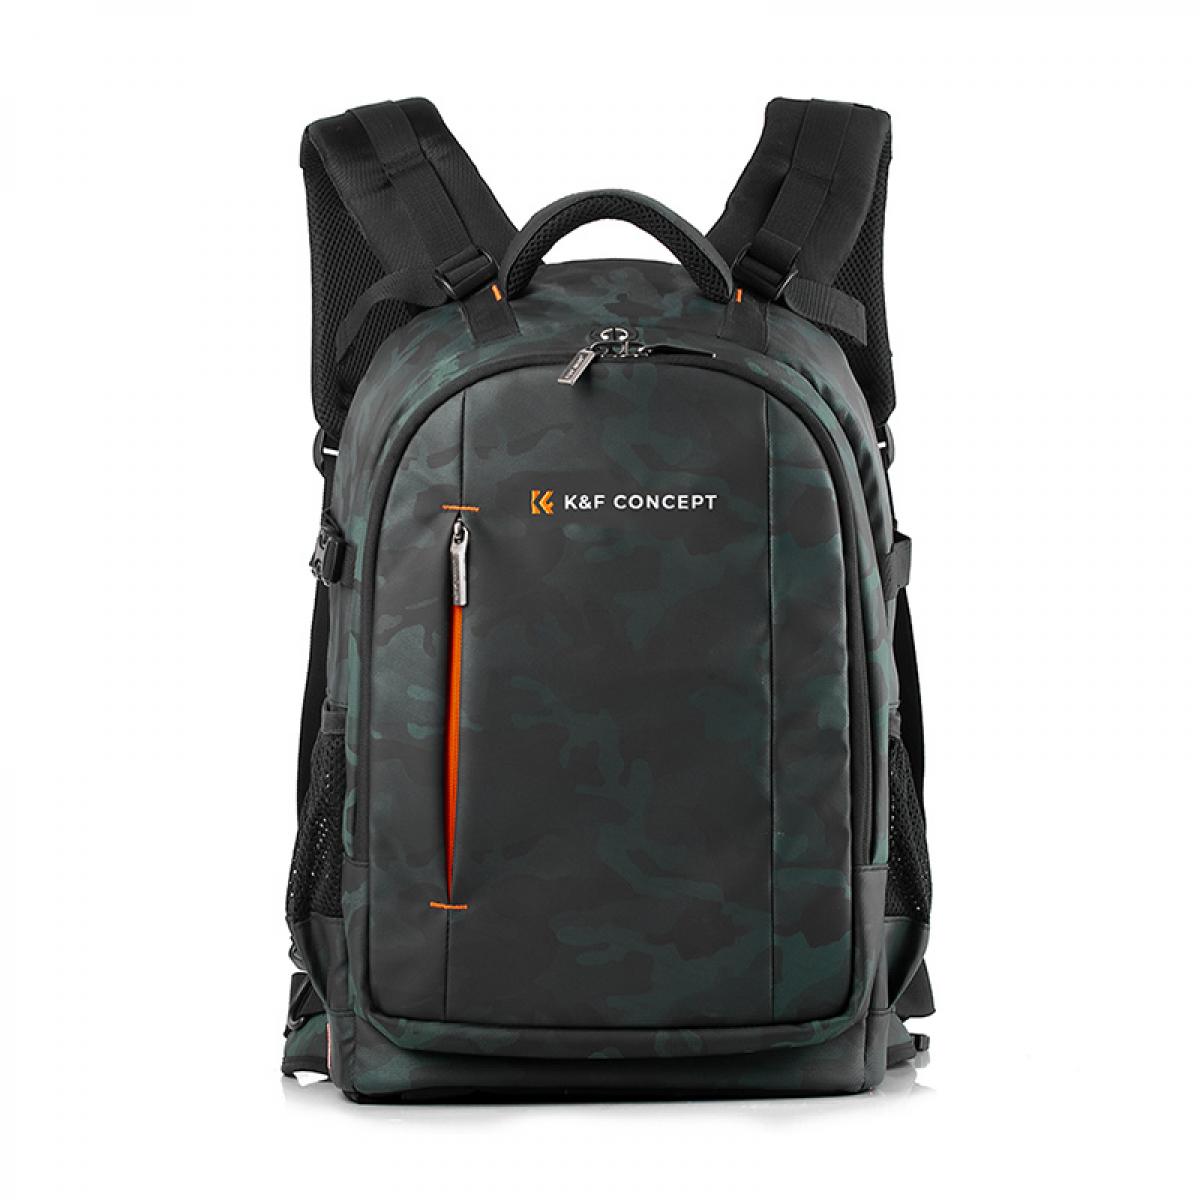 K&f Concept Beta Backpack 22 literes, fots htizsk, vzll